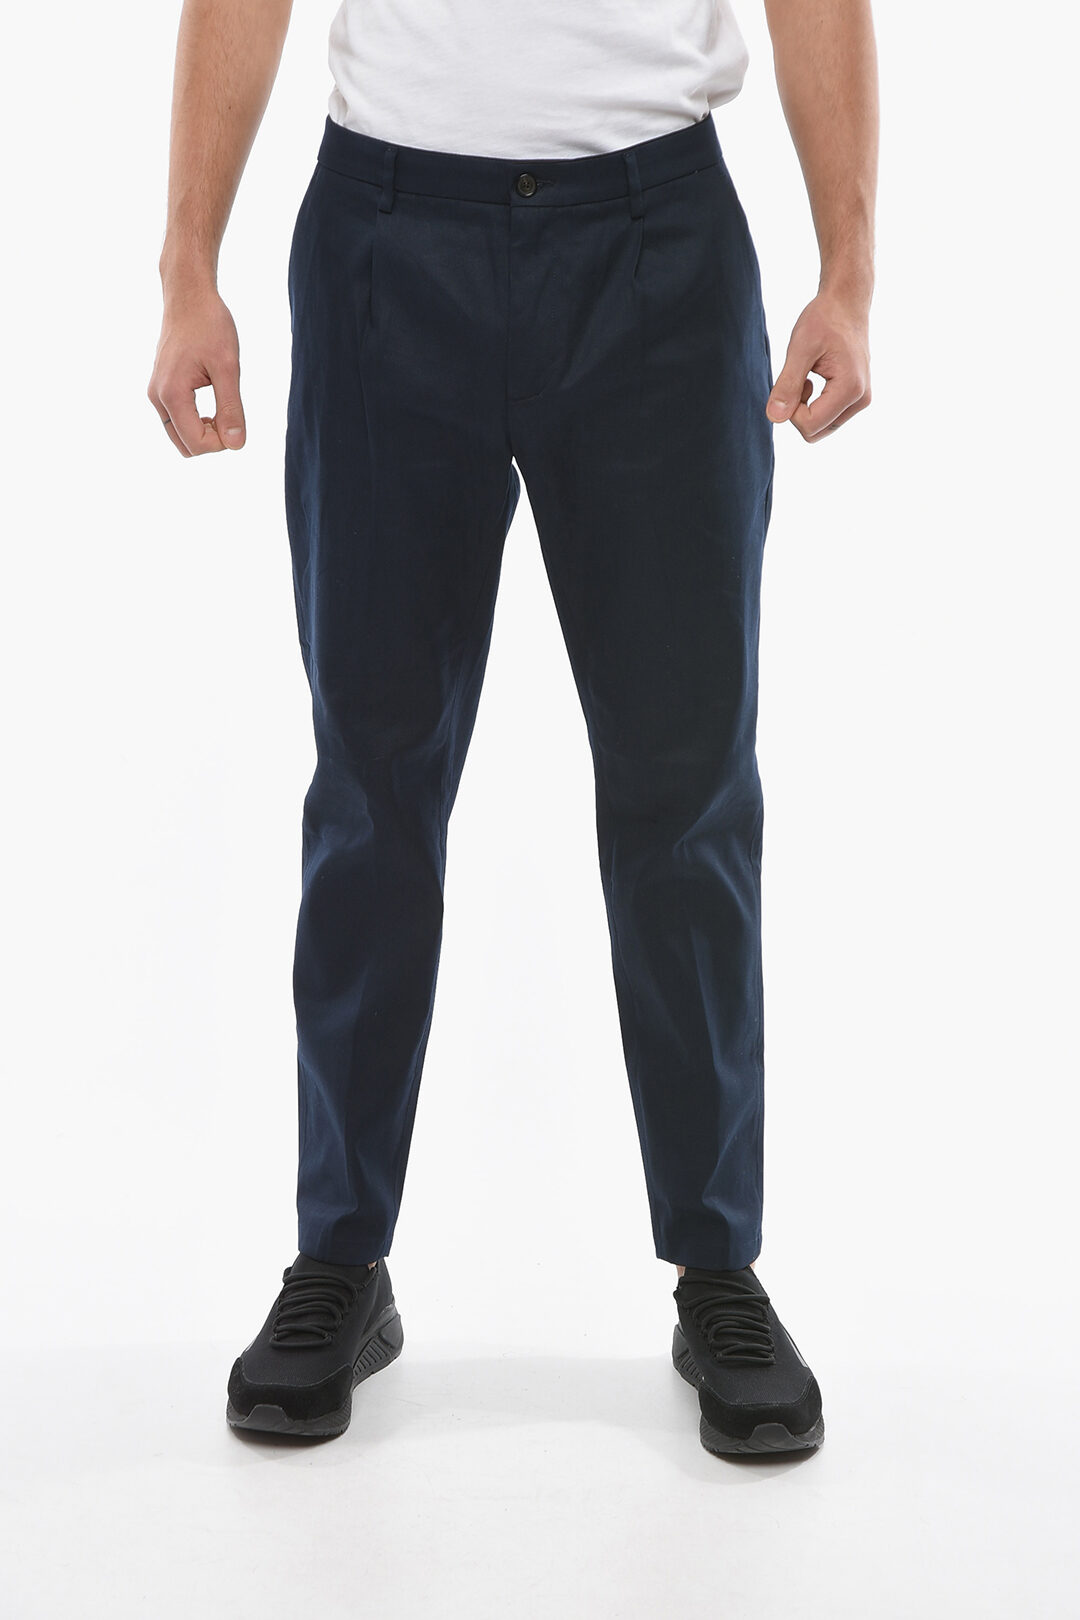 Single Pleat Tailored fit men trouser-| Mytailorstore